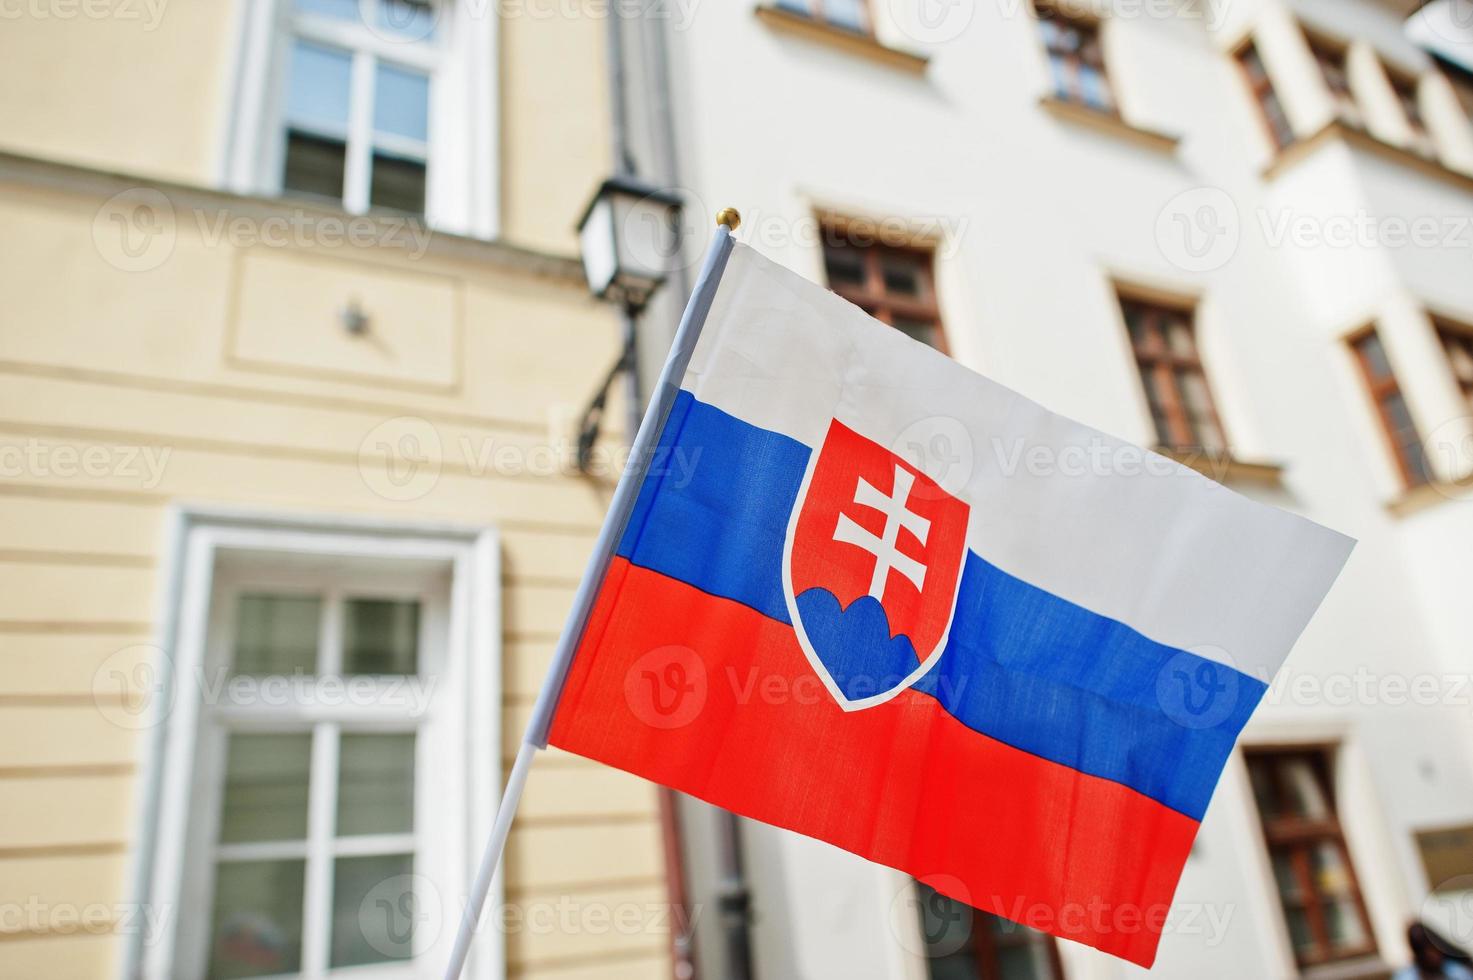 Flag of Slovakia in hand against street of Bratislava. photo